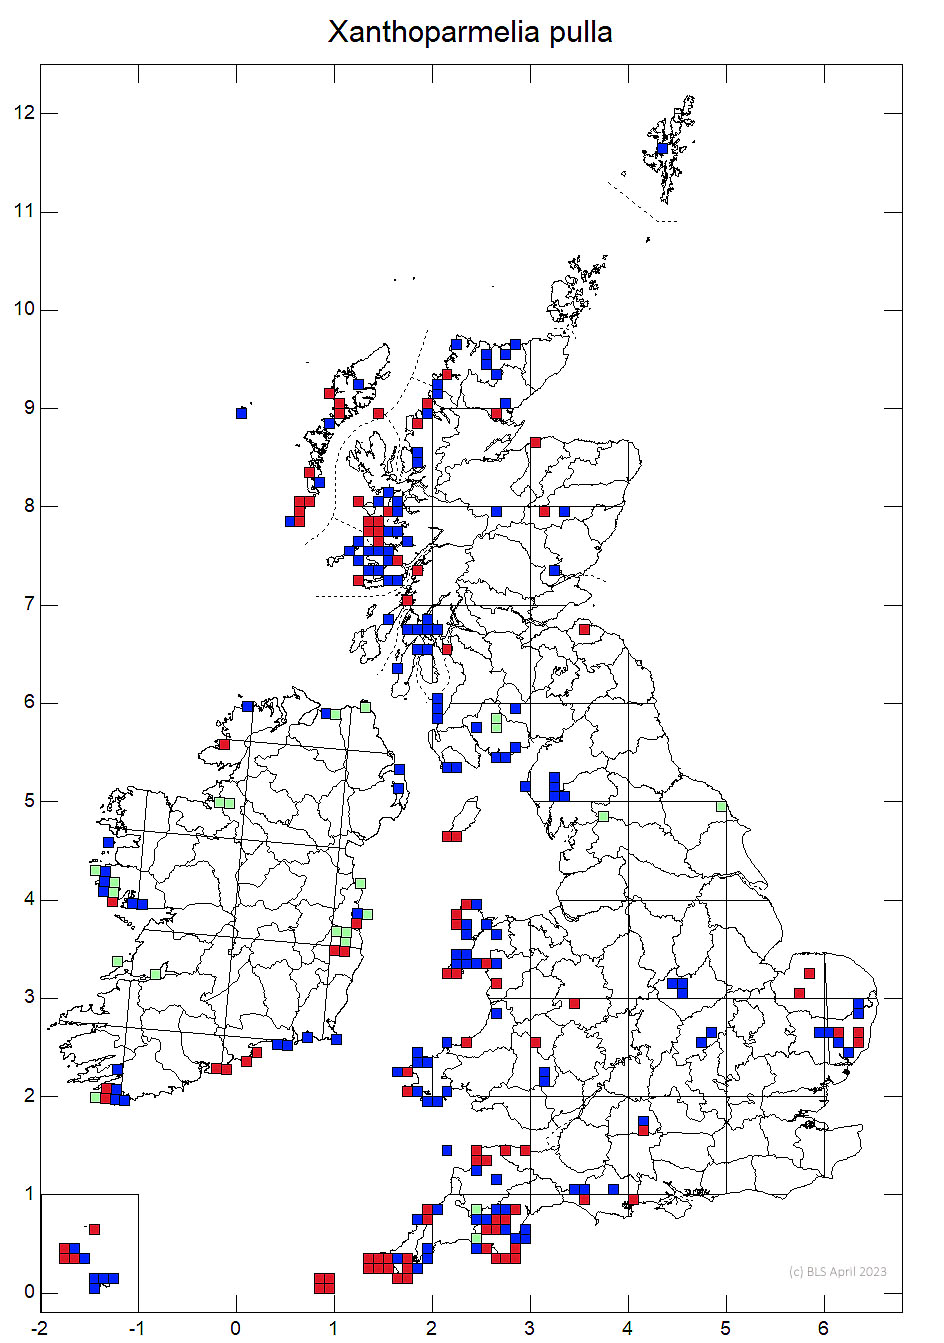 Xanthoparmelia pulla 10km sq distribution map